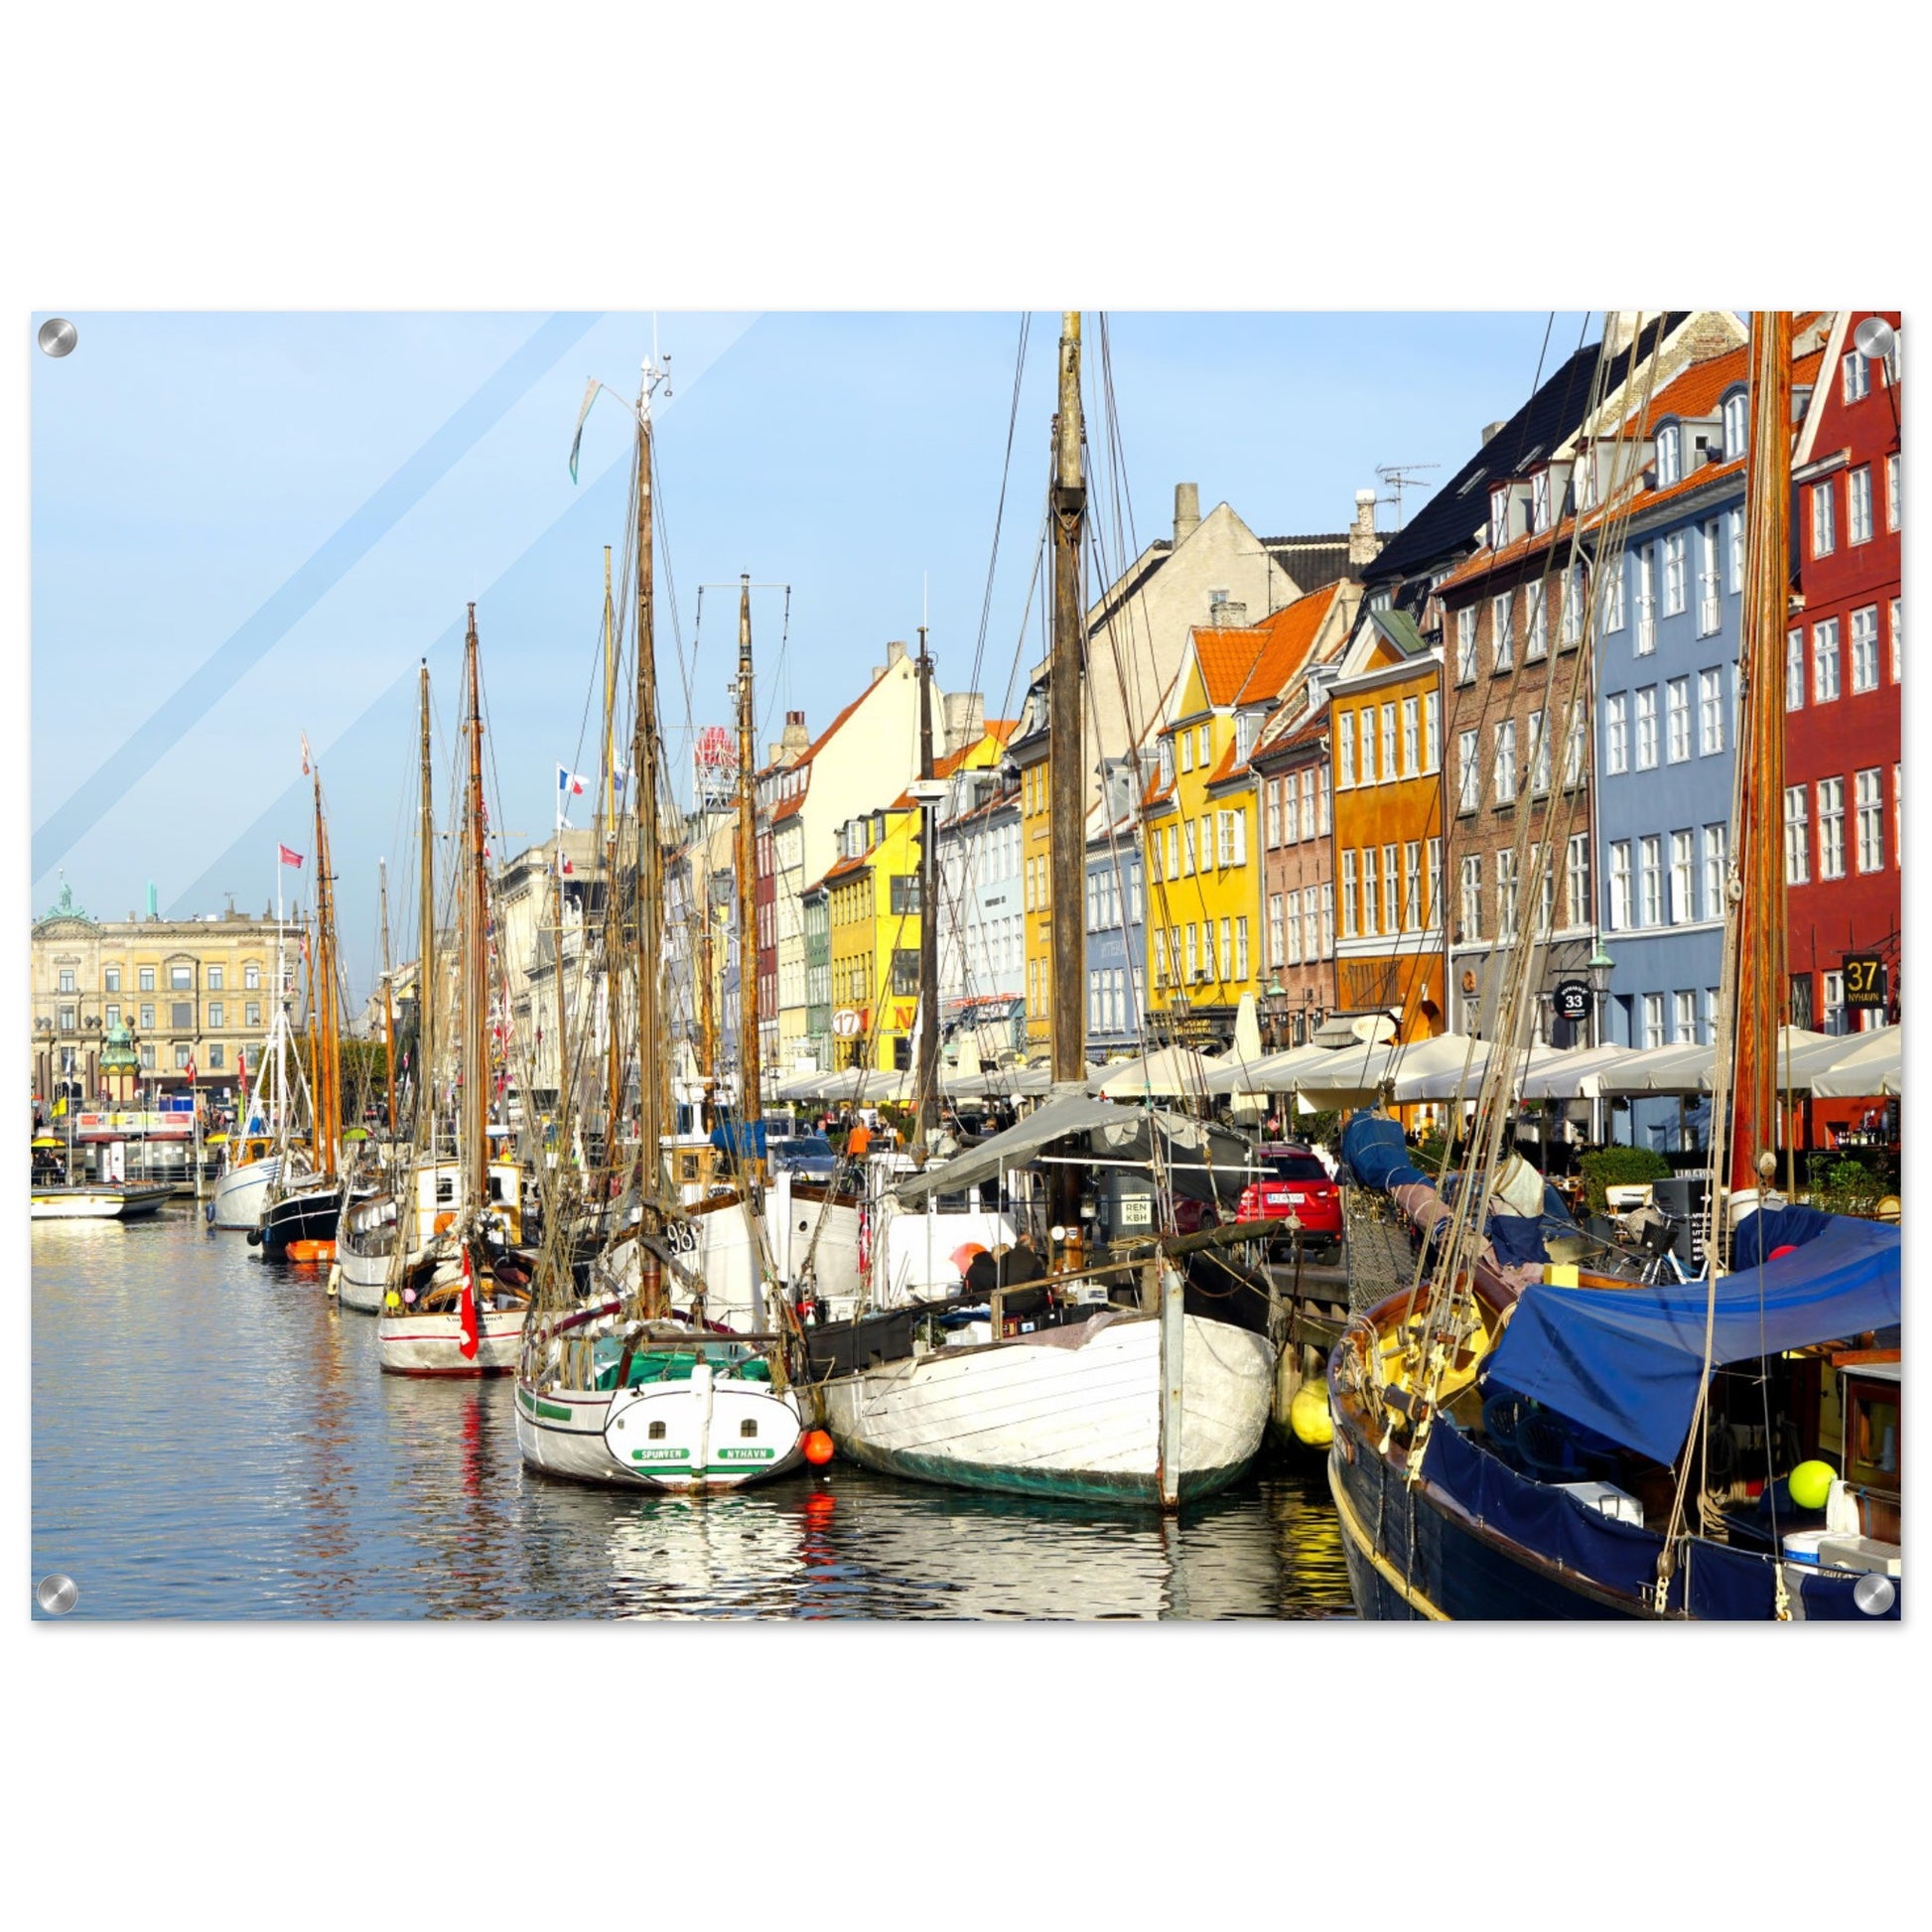 Acrylic HQ Photo Print of Nyhavn in Copenhagen - Posterify